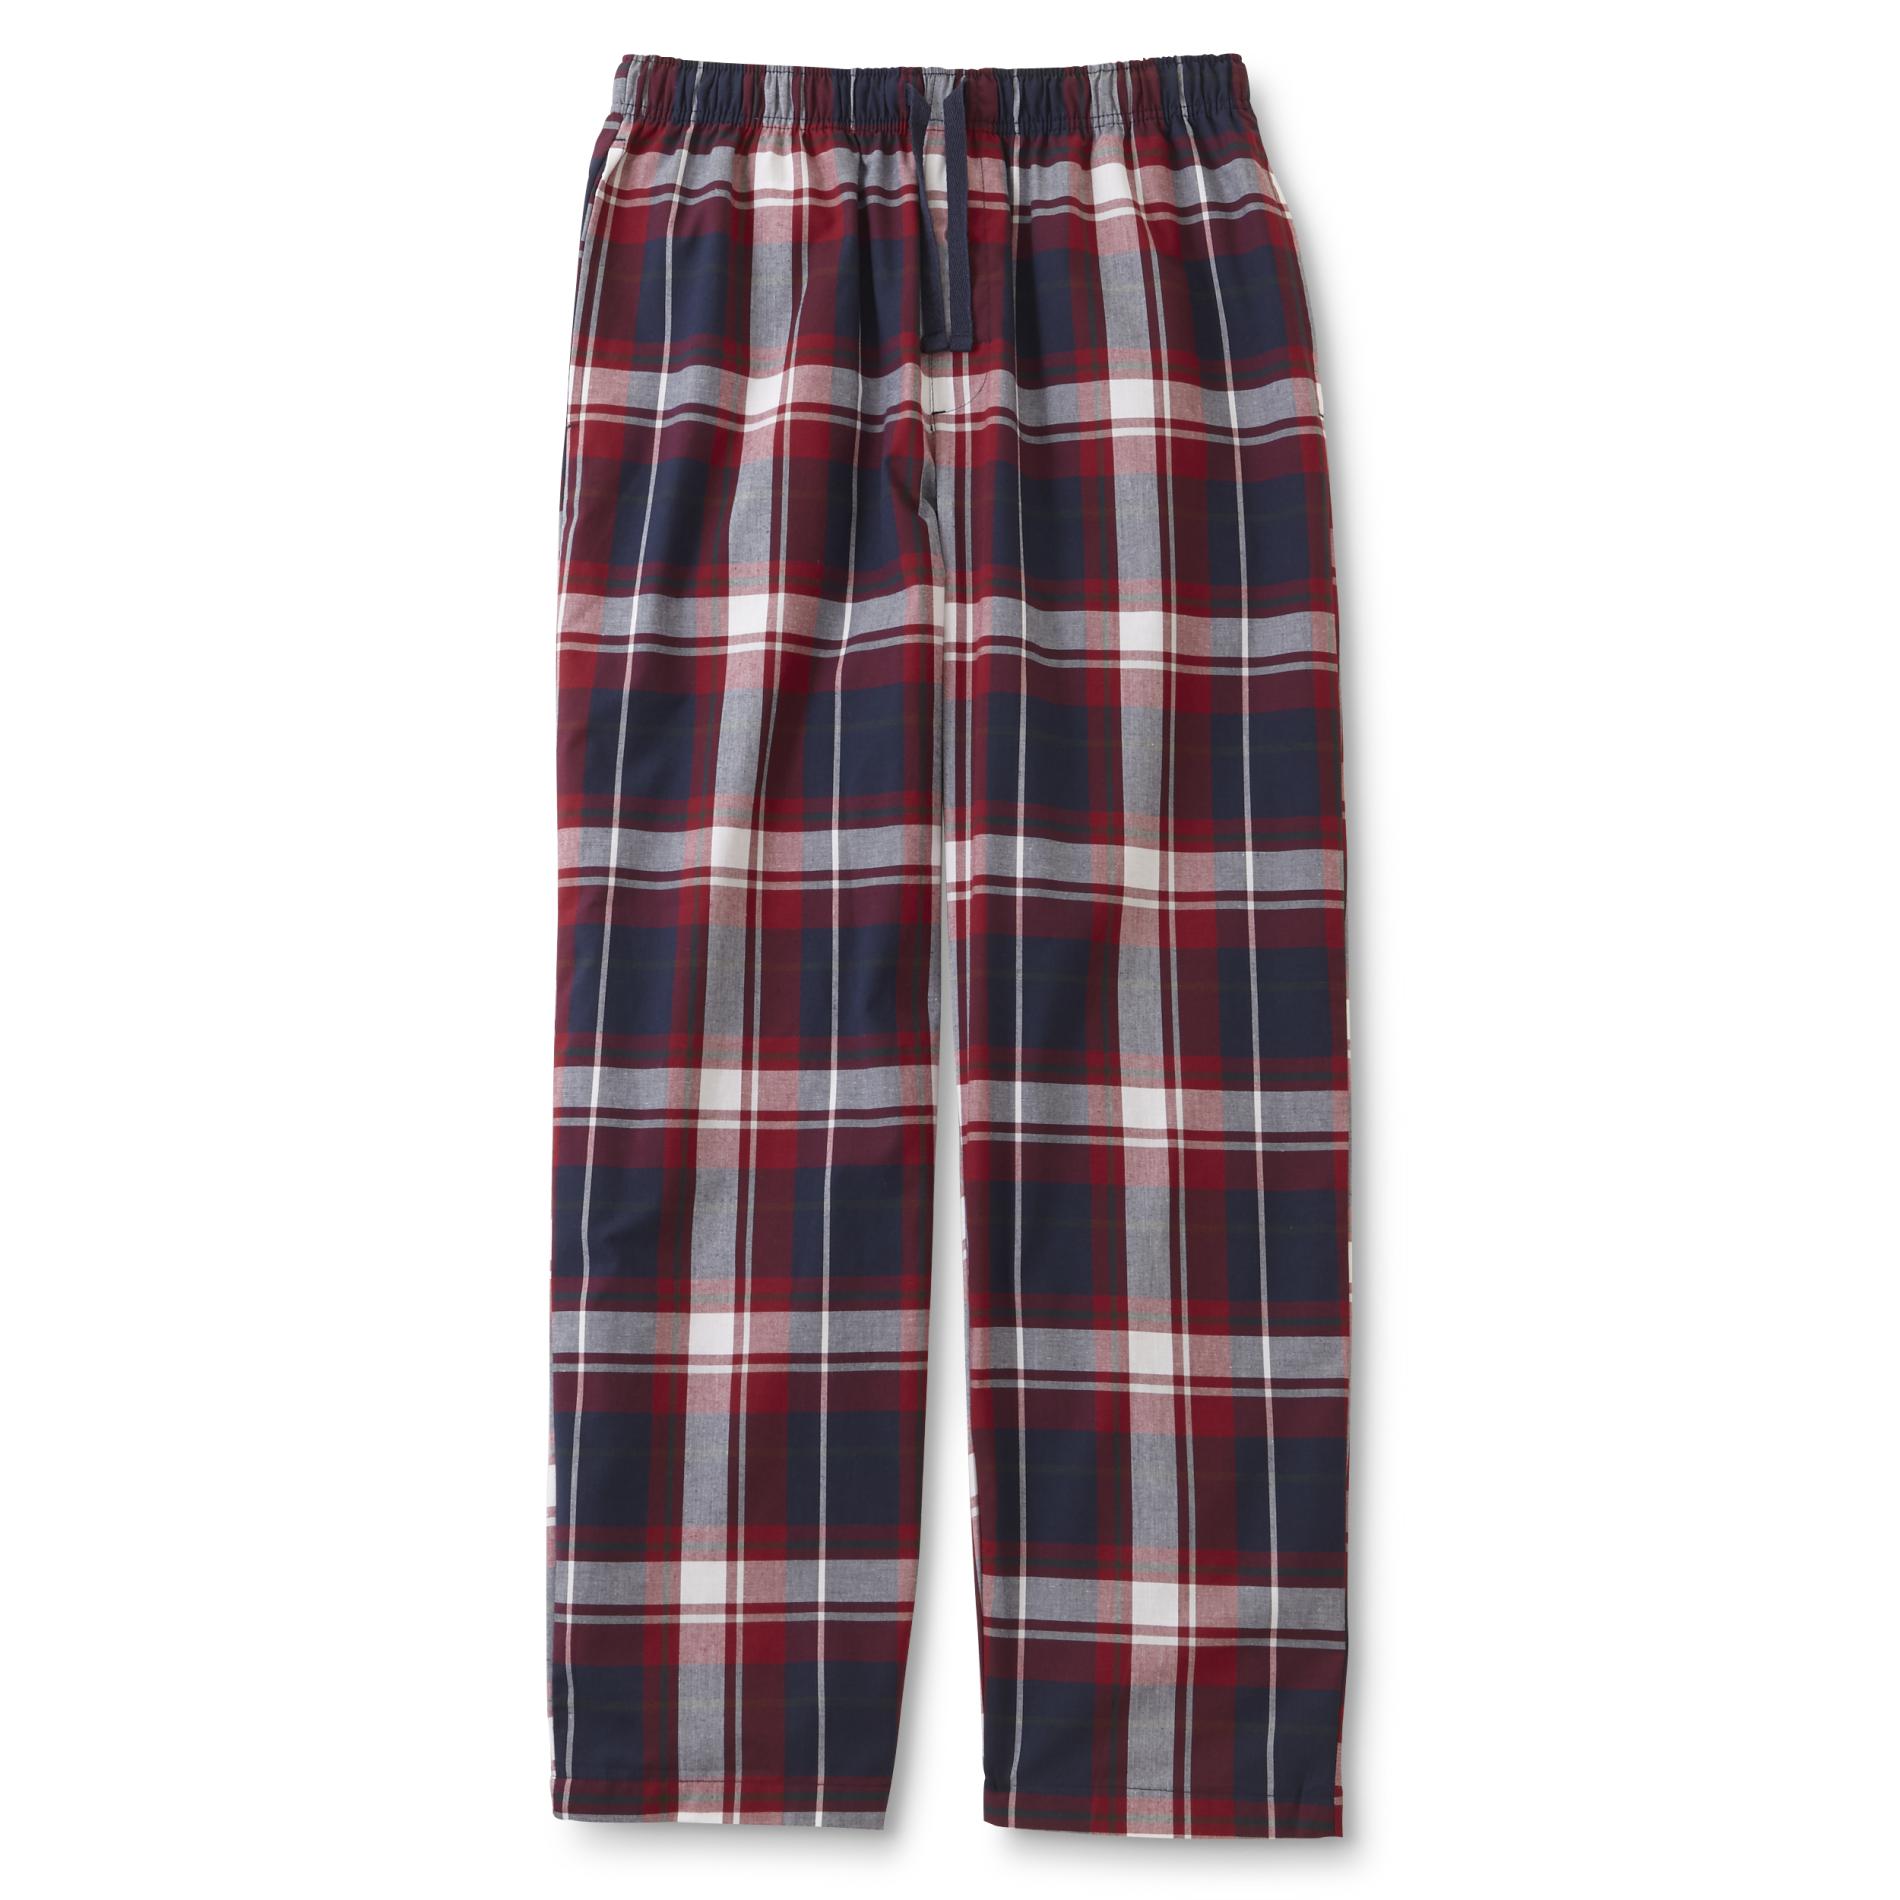 Basic Editions Men's Poplin Pajama Pants - Plaid | Shop Your Way ...